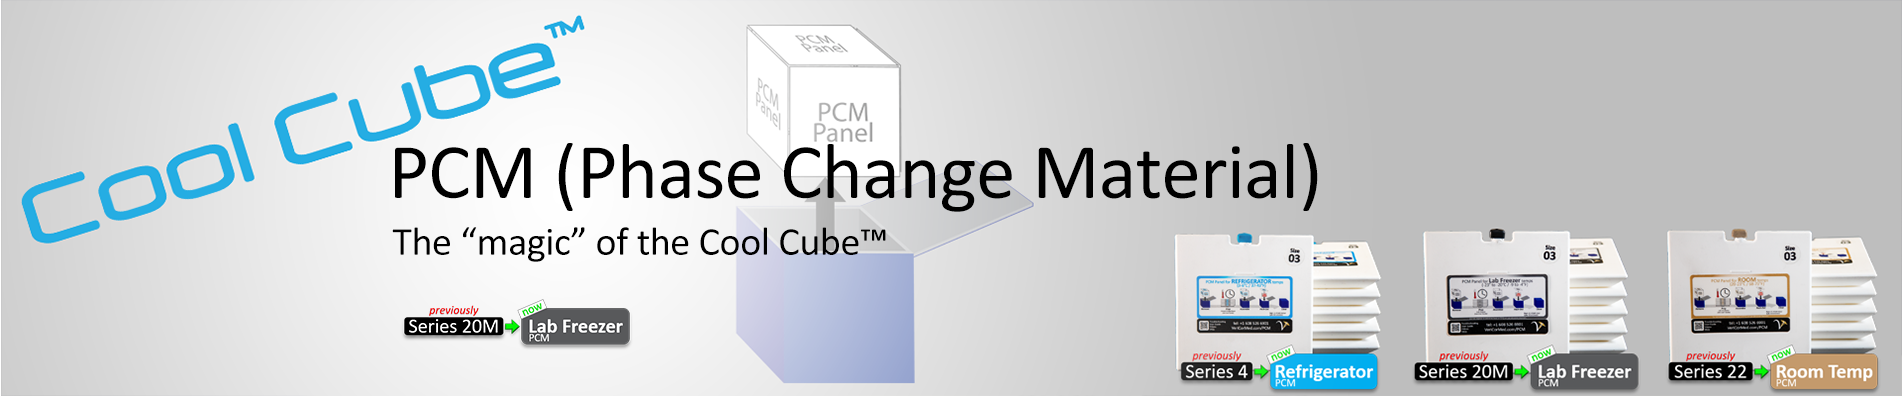 PCM - Phase Change Material Header